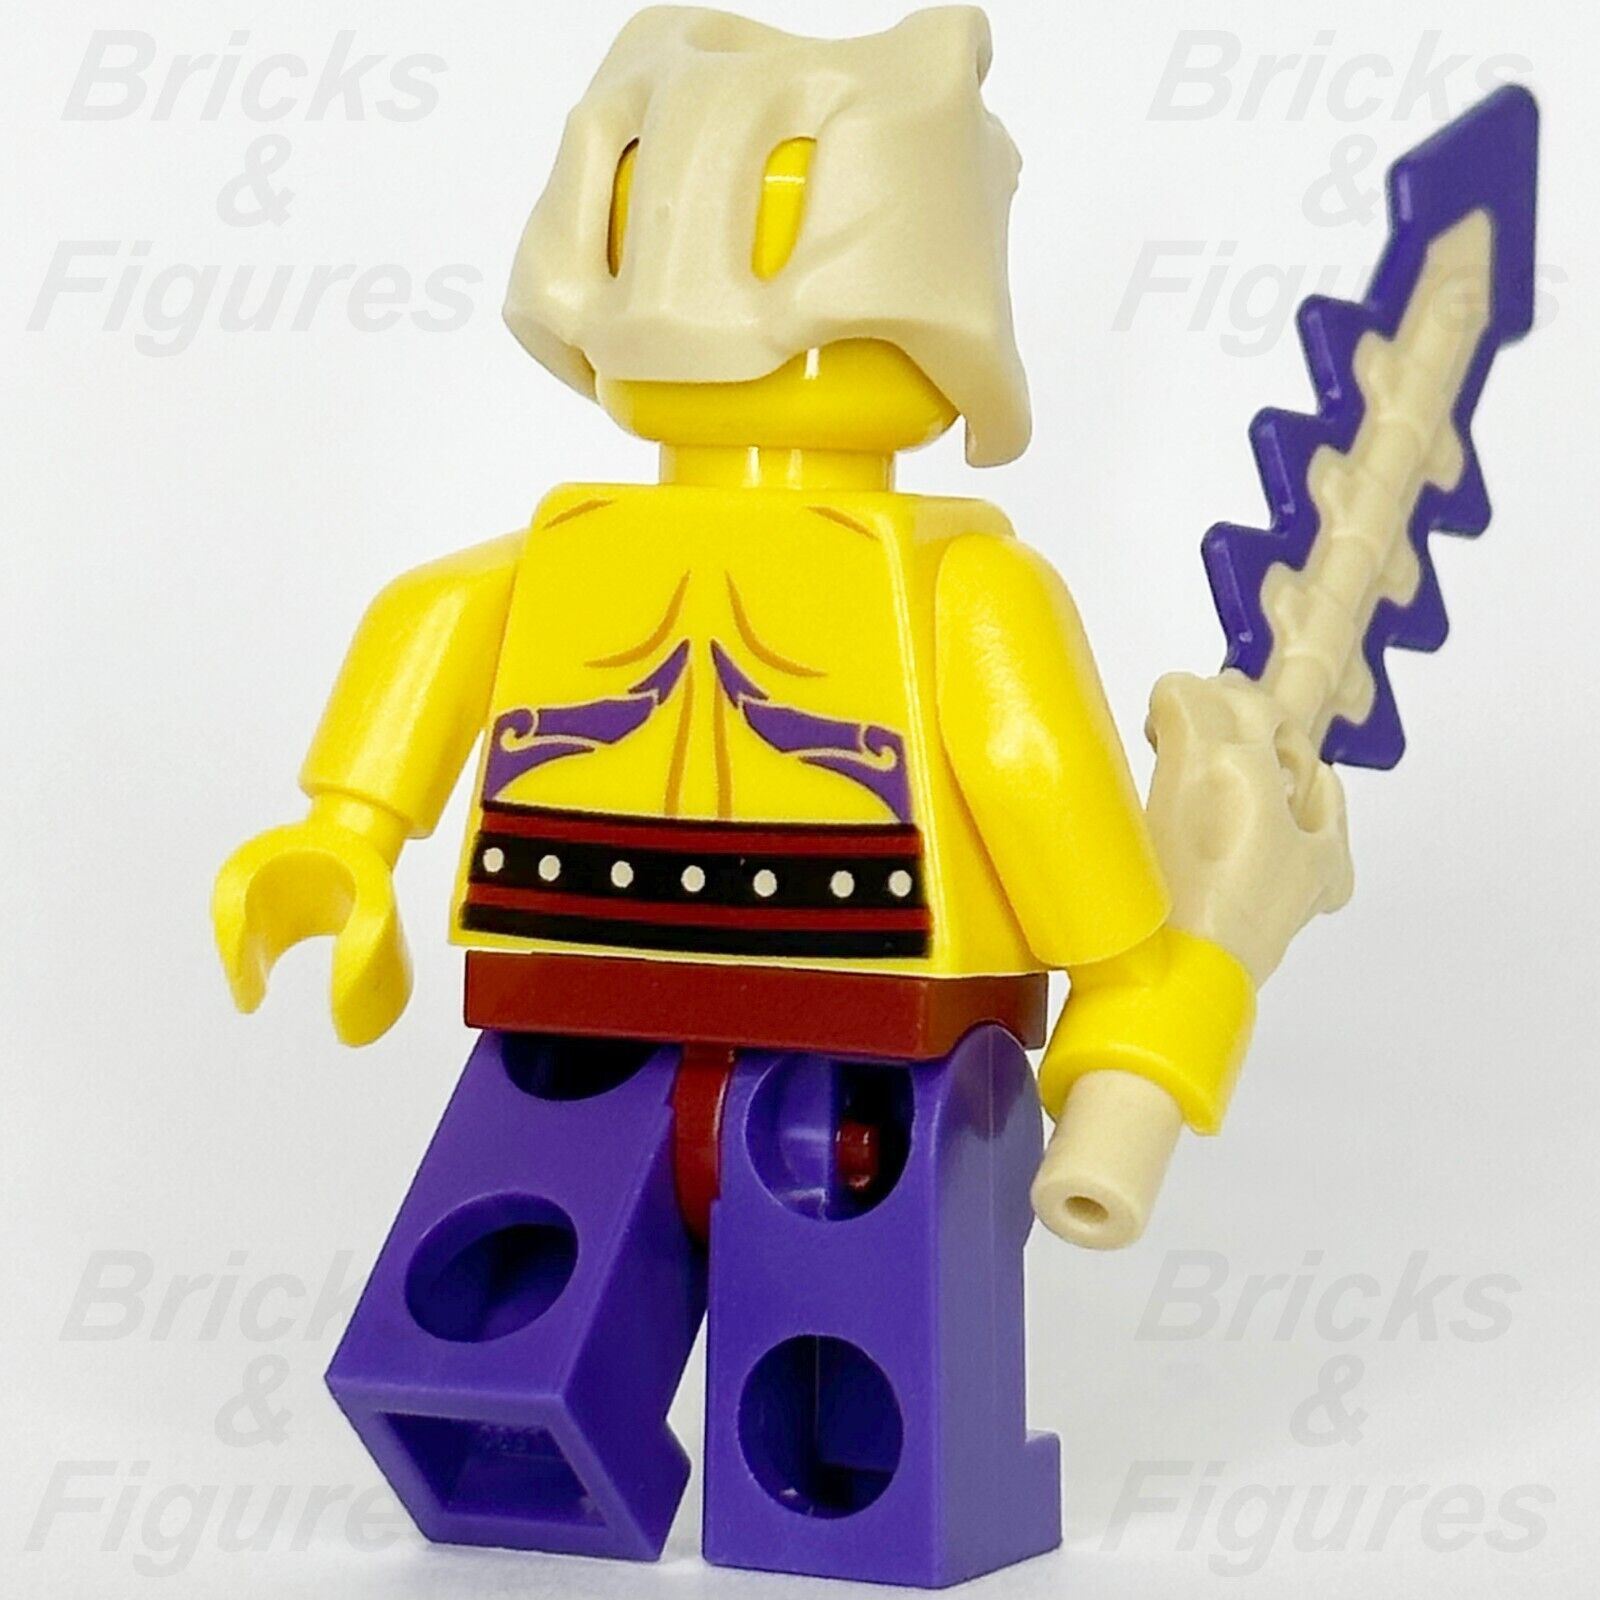 LEGO NINJAGO KRAIT MINIFIGURE TOURNAMENT OF ELEMENTS MINIFIG NJO120 70745 70752 891502 03